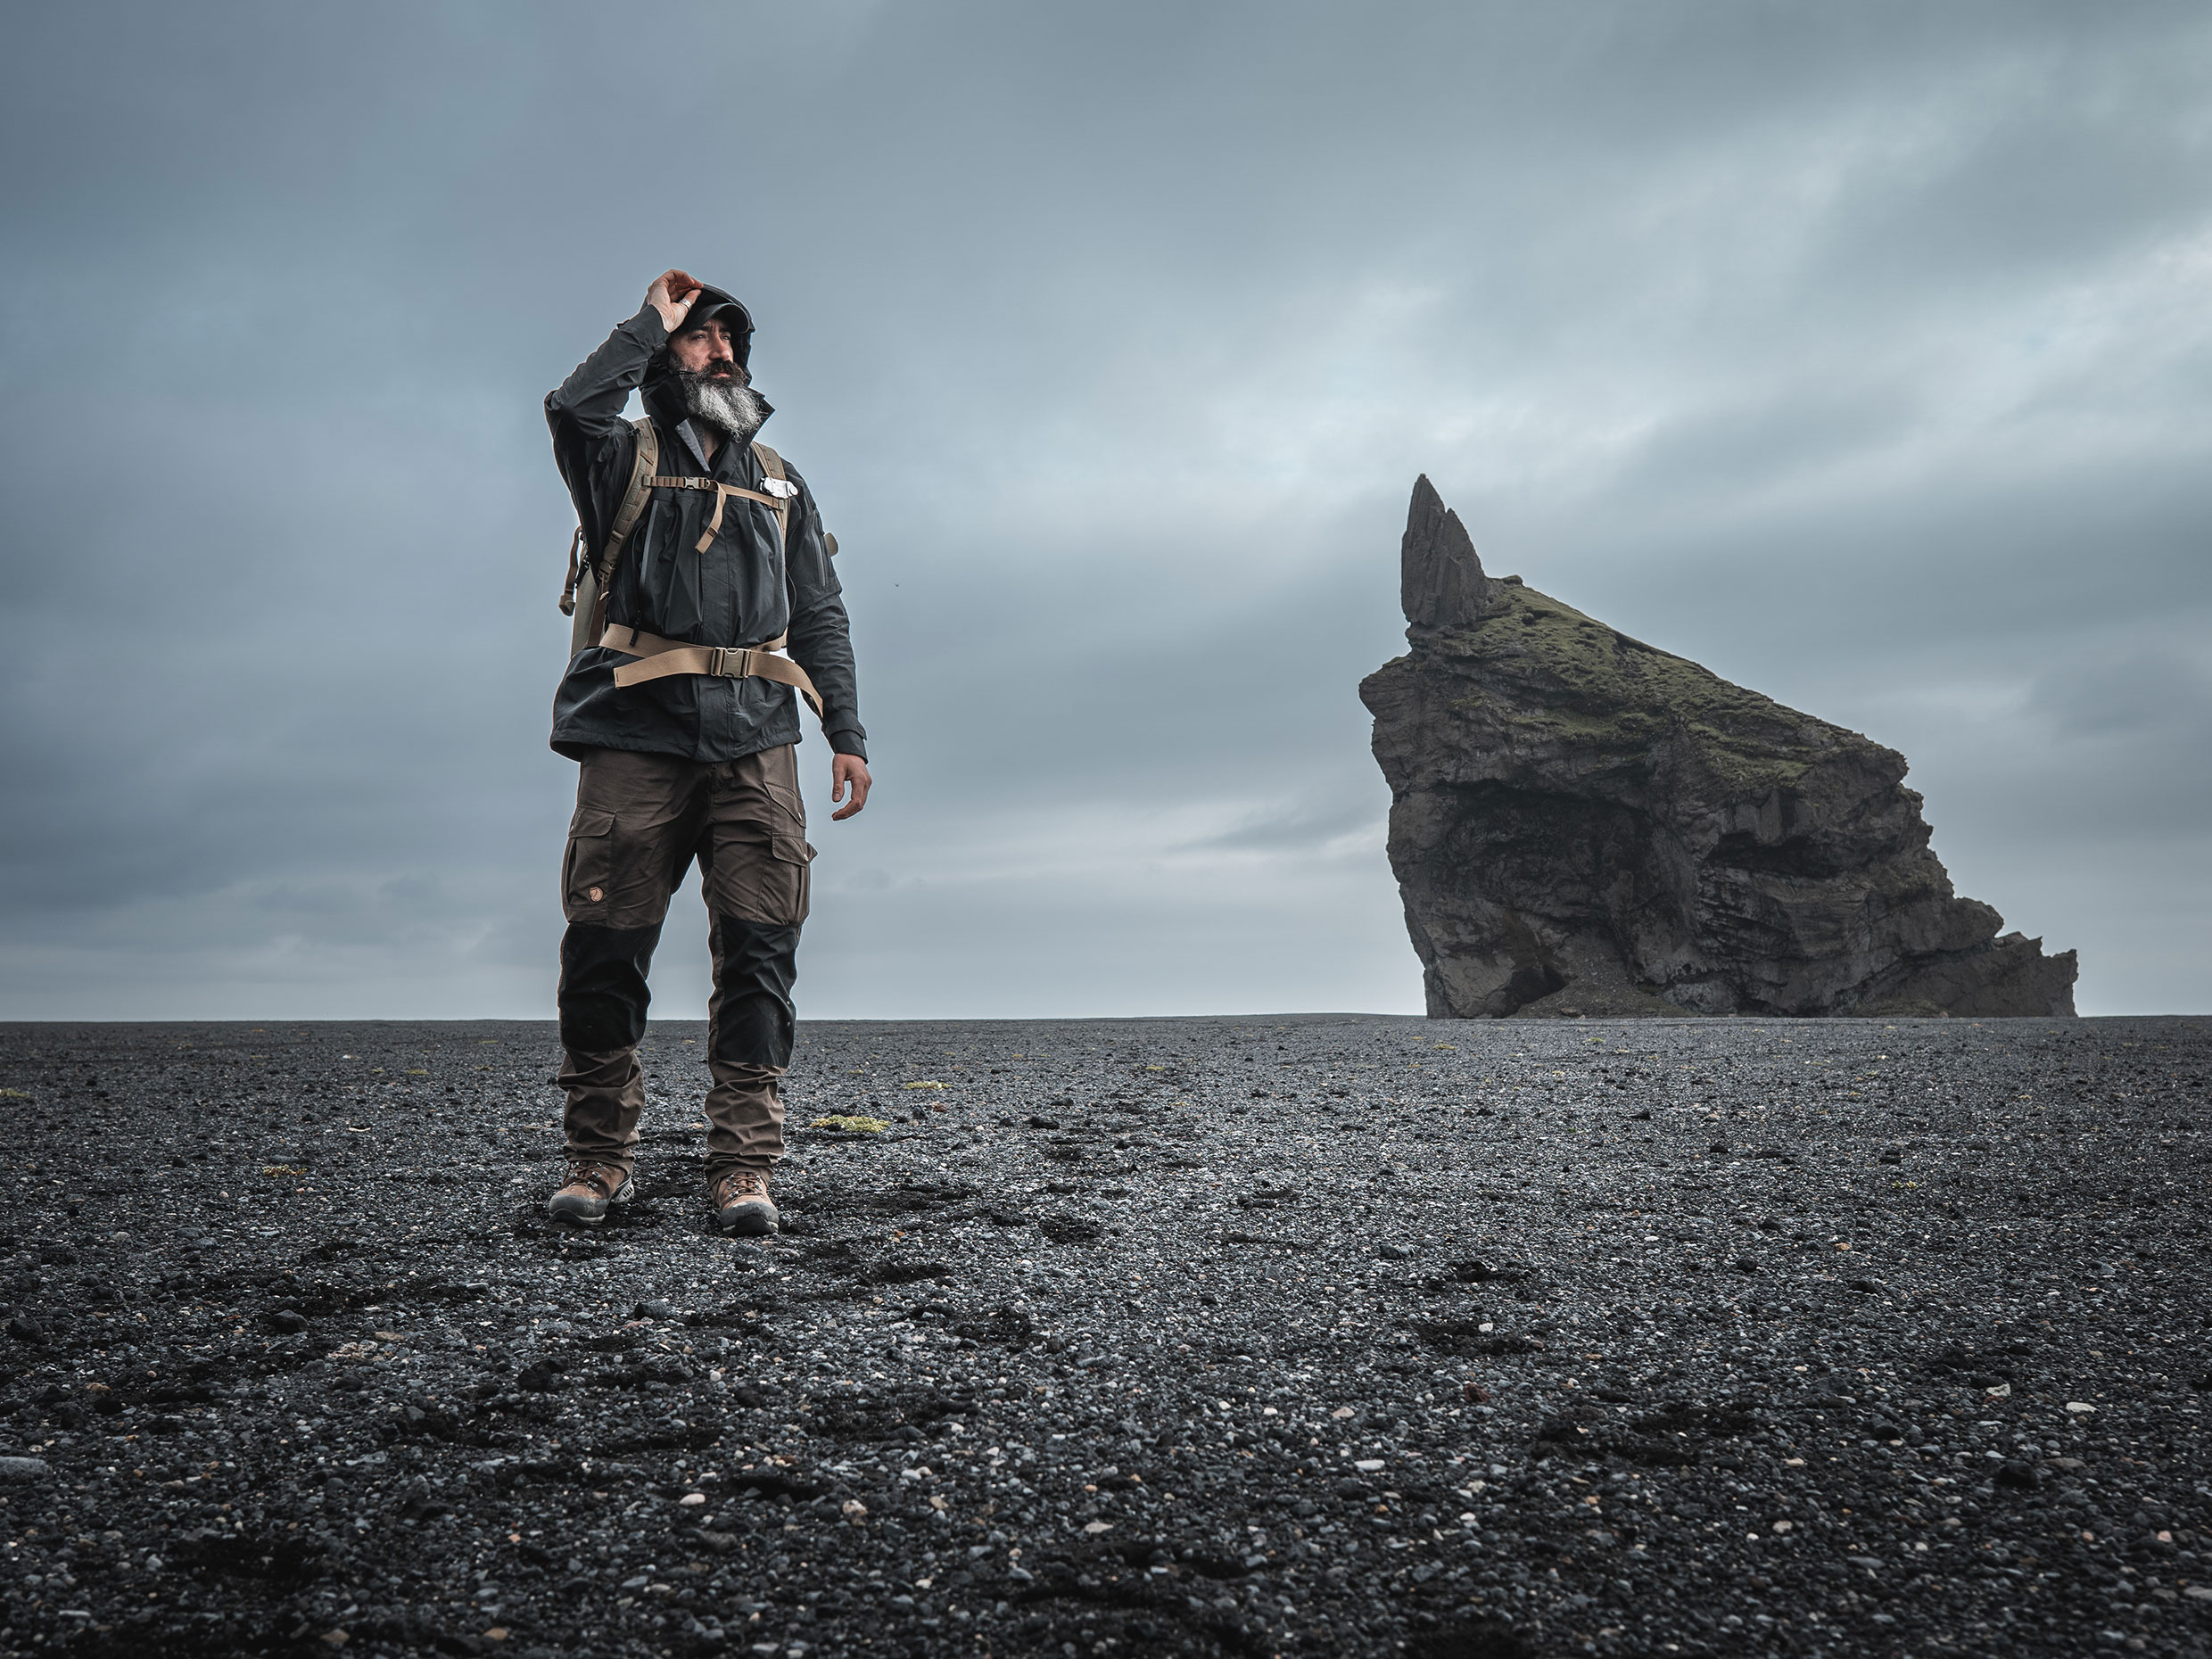 Bushcraft expert Alex Wander standing alone in a lava landscape on Iceland